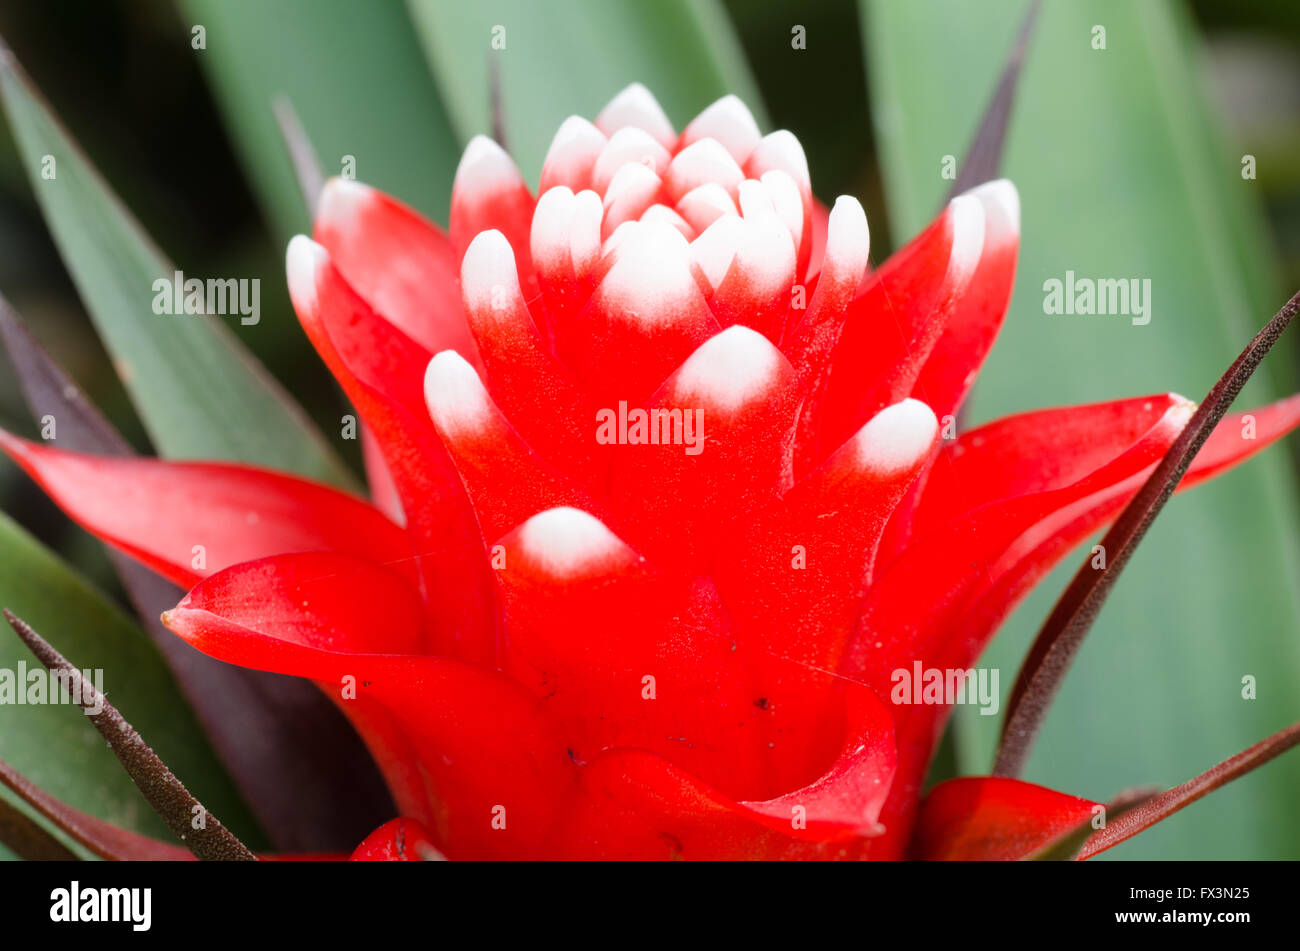 Nice red leafy bromeliad plant Stock Photo